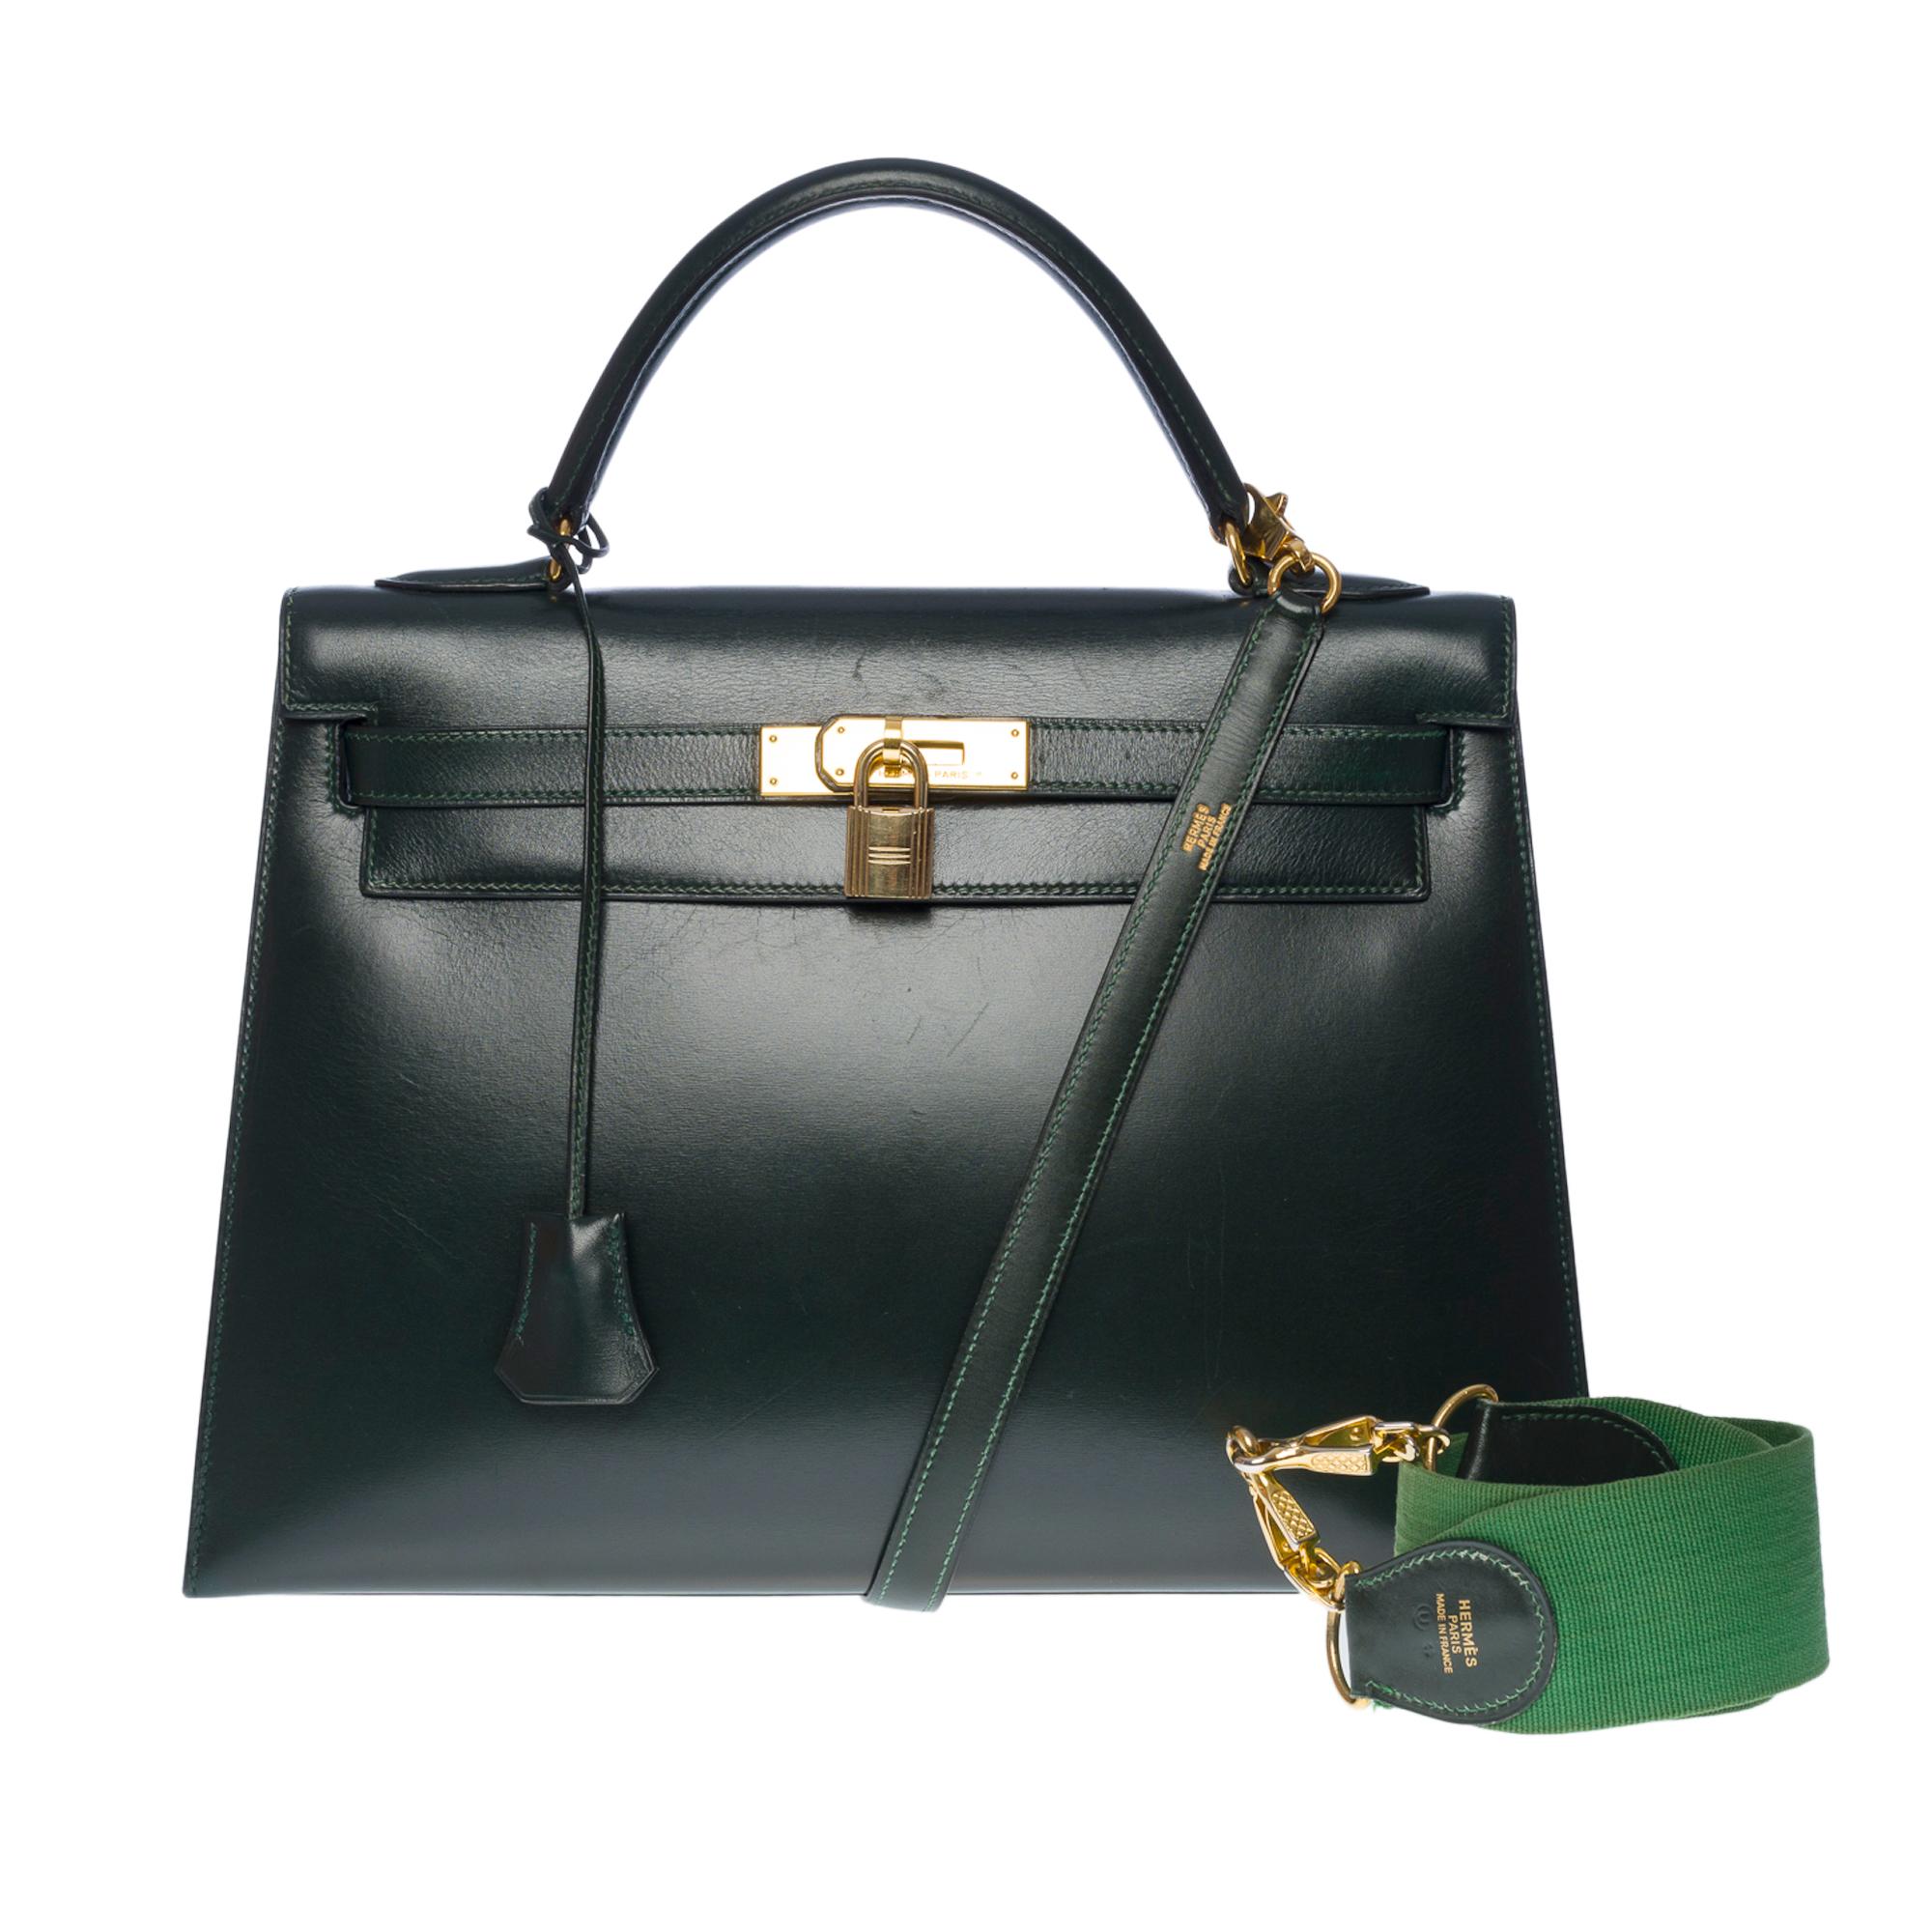 Rare Hermès Kelly 32 sellier handbag double straps in green box calf leather, GHW Bon état - En vente à Paris, IDF